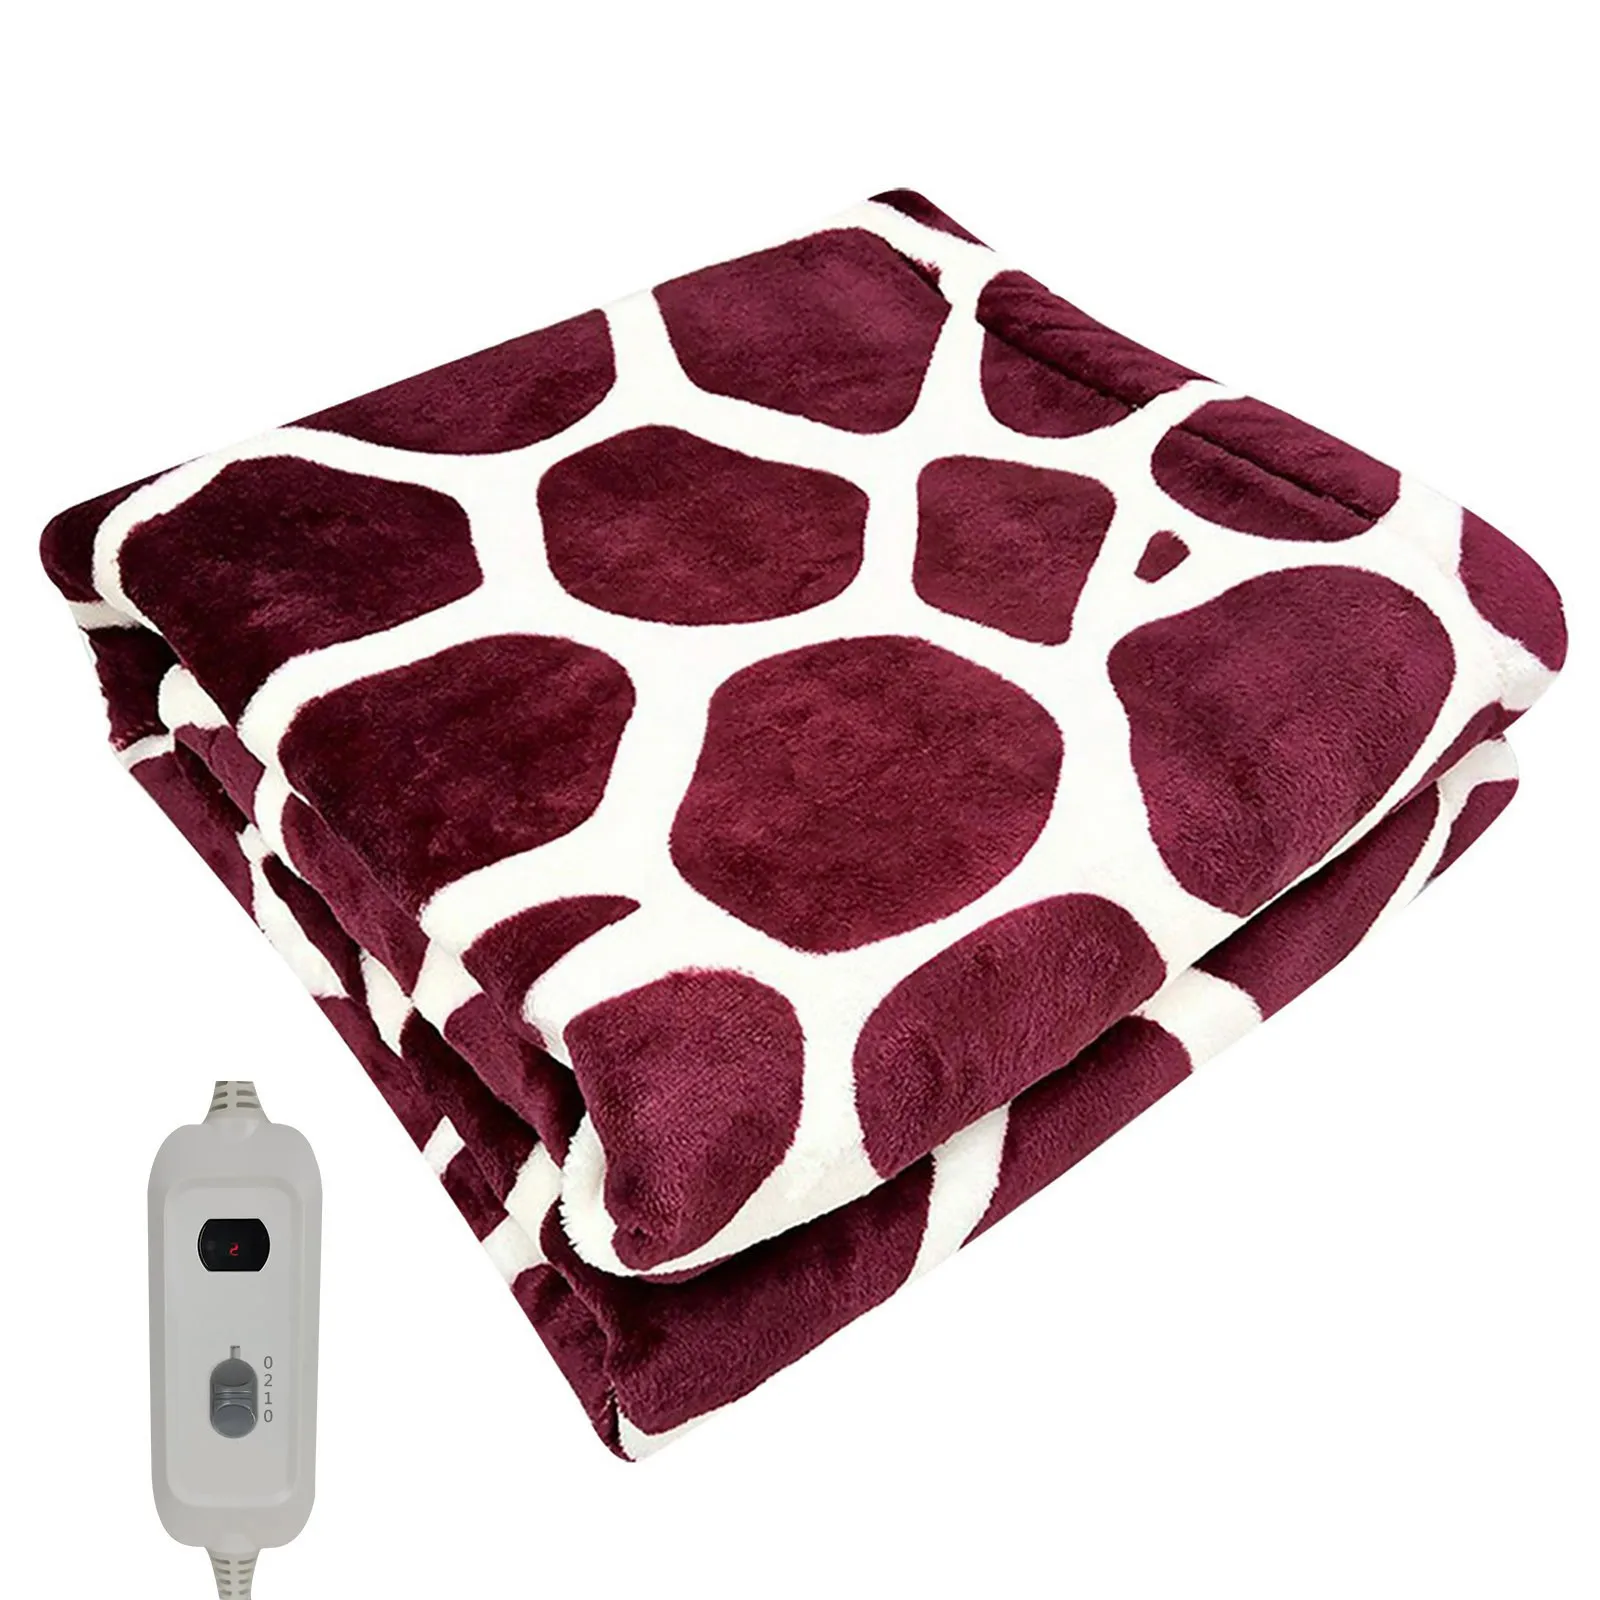 

Мягкое фланелевое одеяло с электрическим подогревом и USB-разъемом, 45 см, осенне-зимнее теплое одеяло с контролем температуры